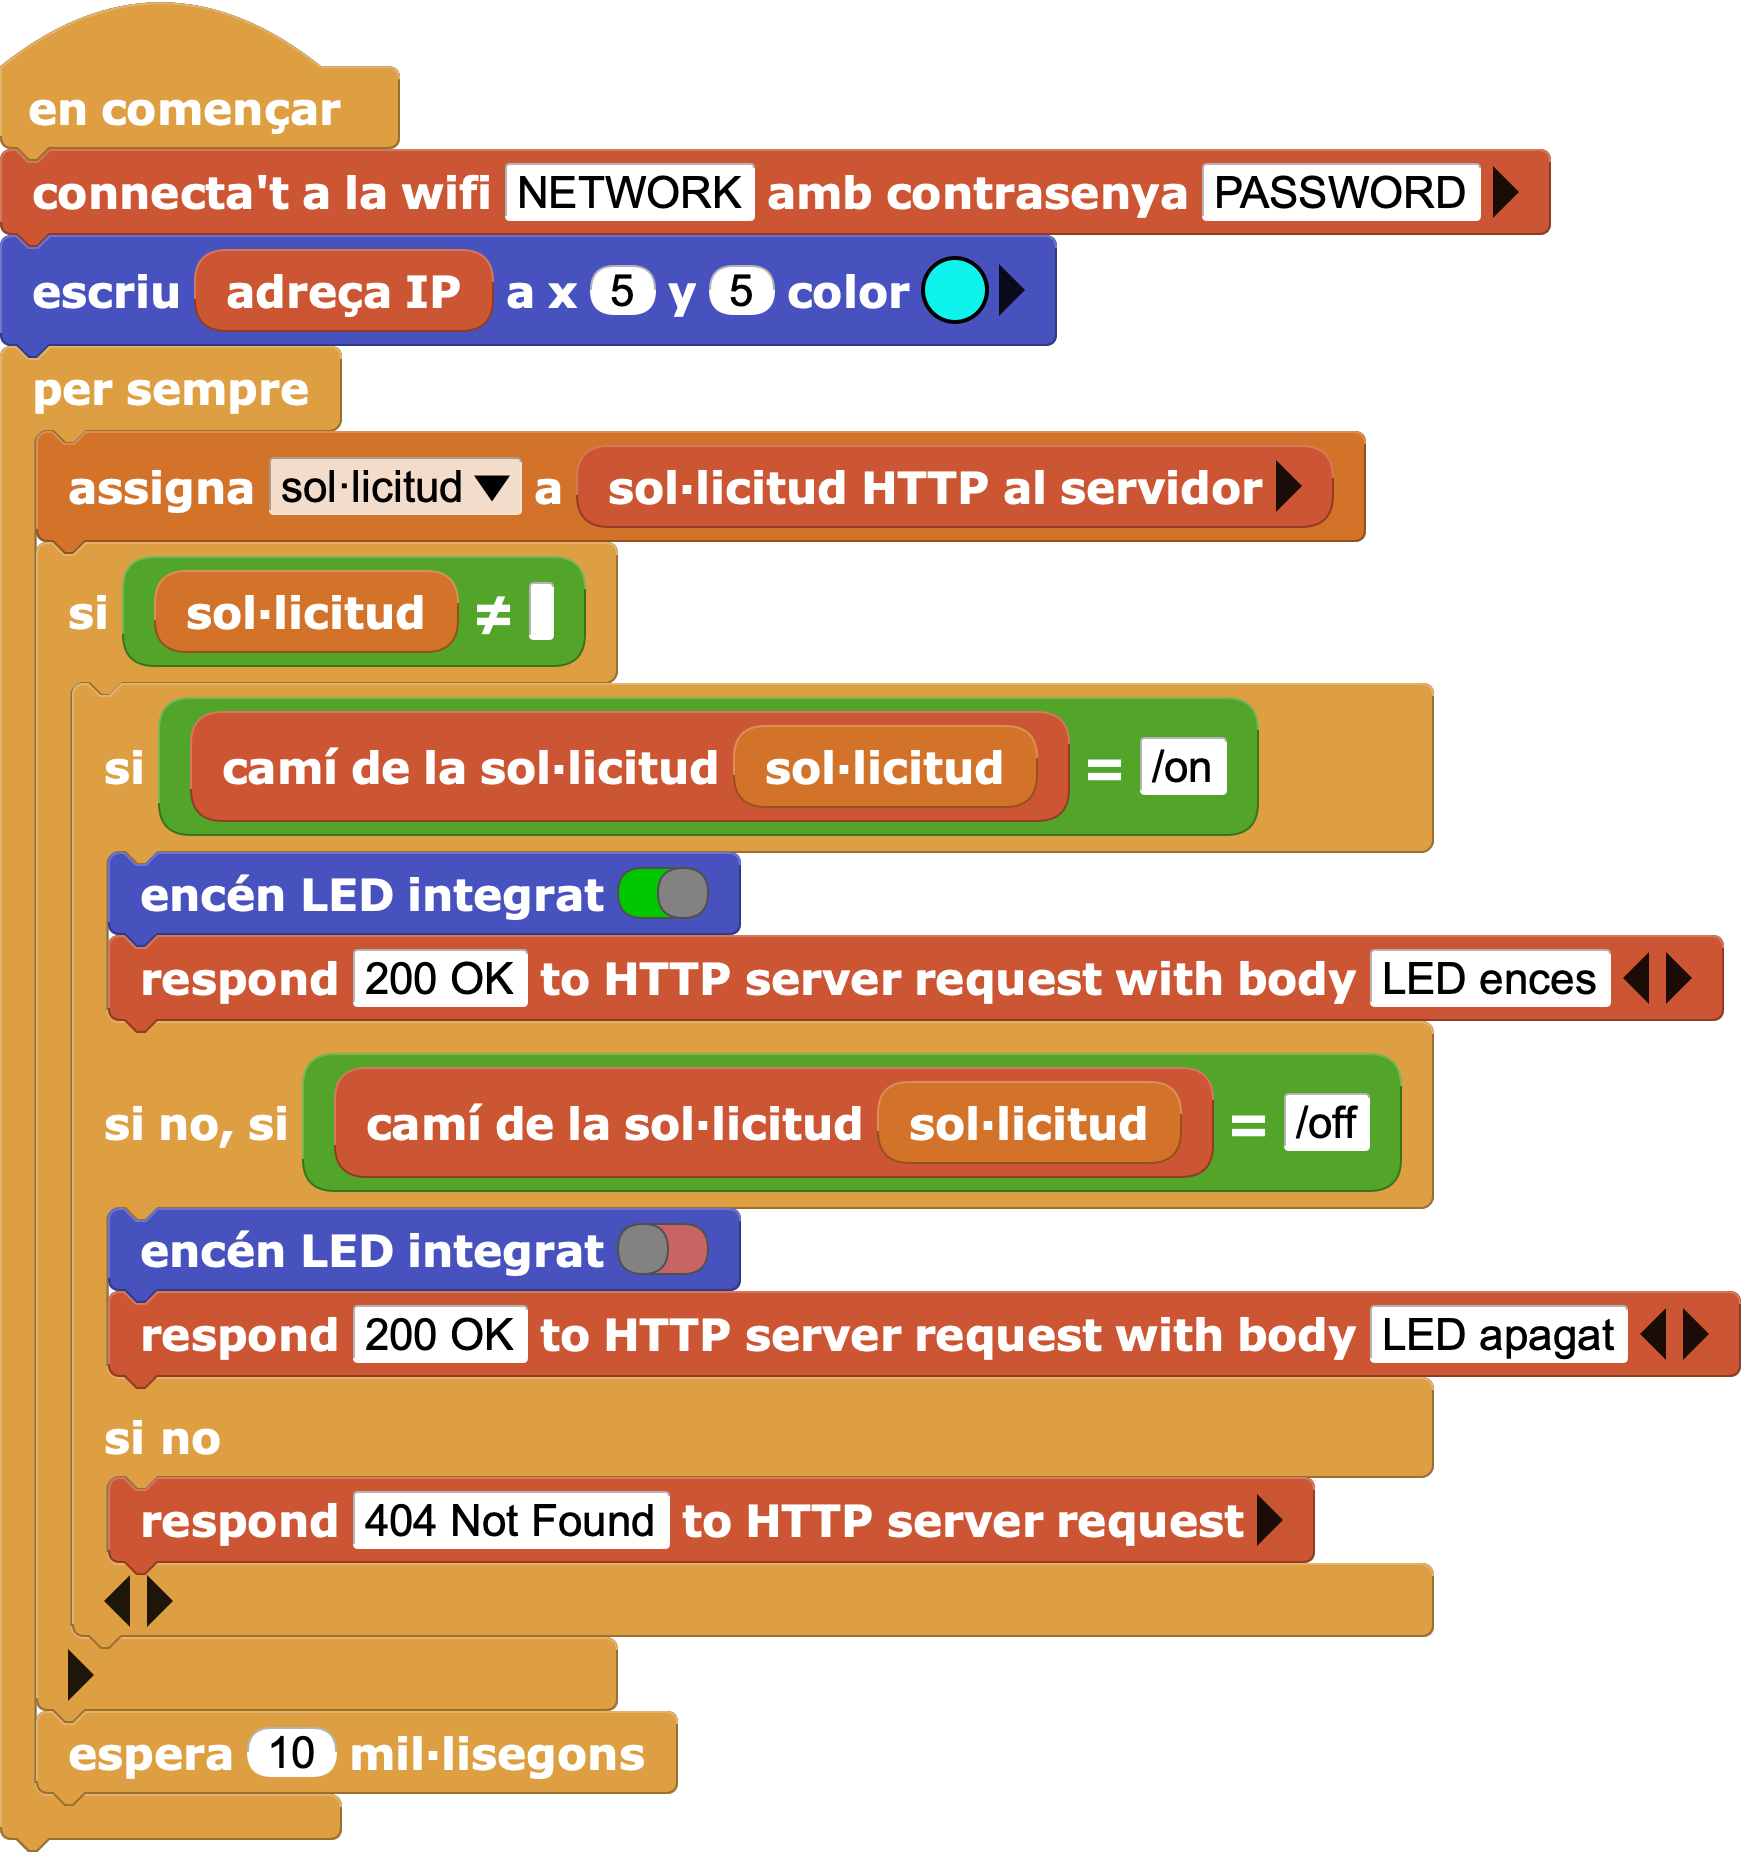 LED controlad amb HTTP